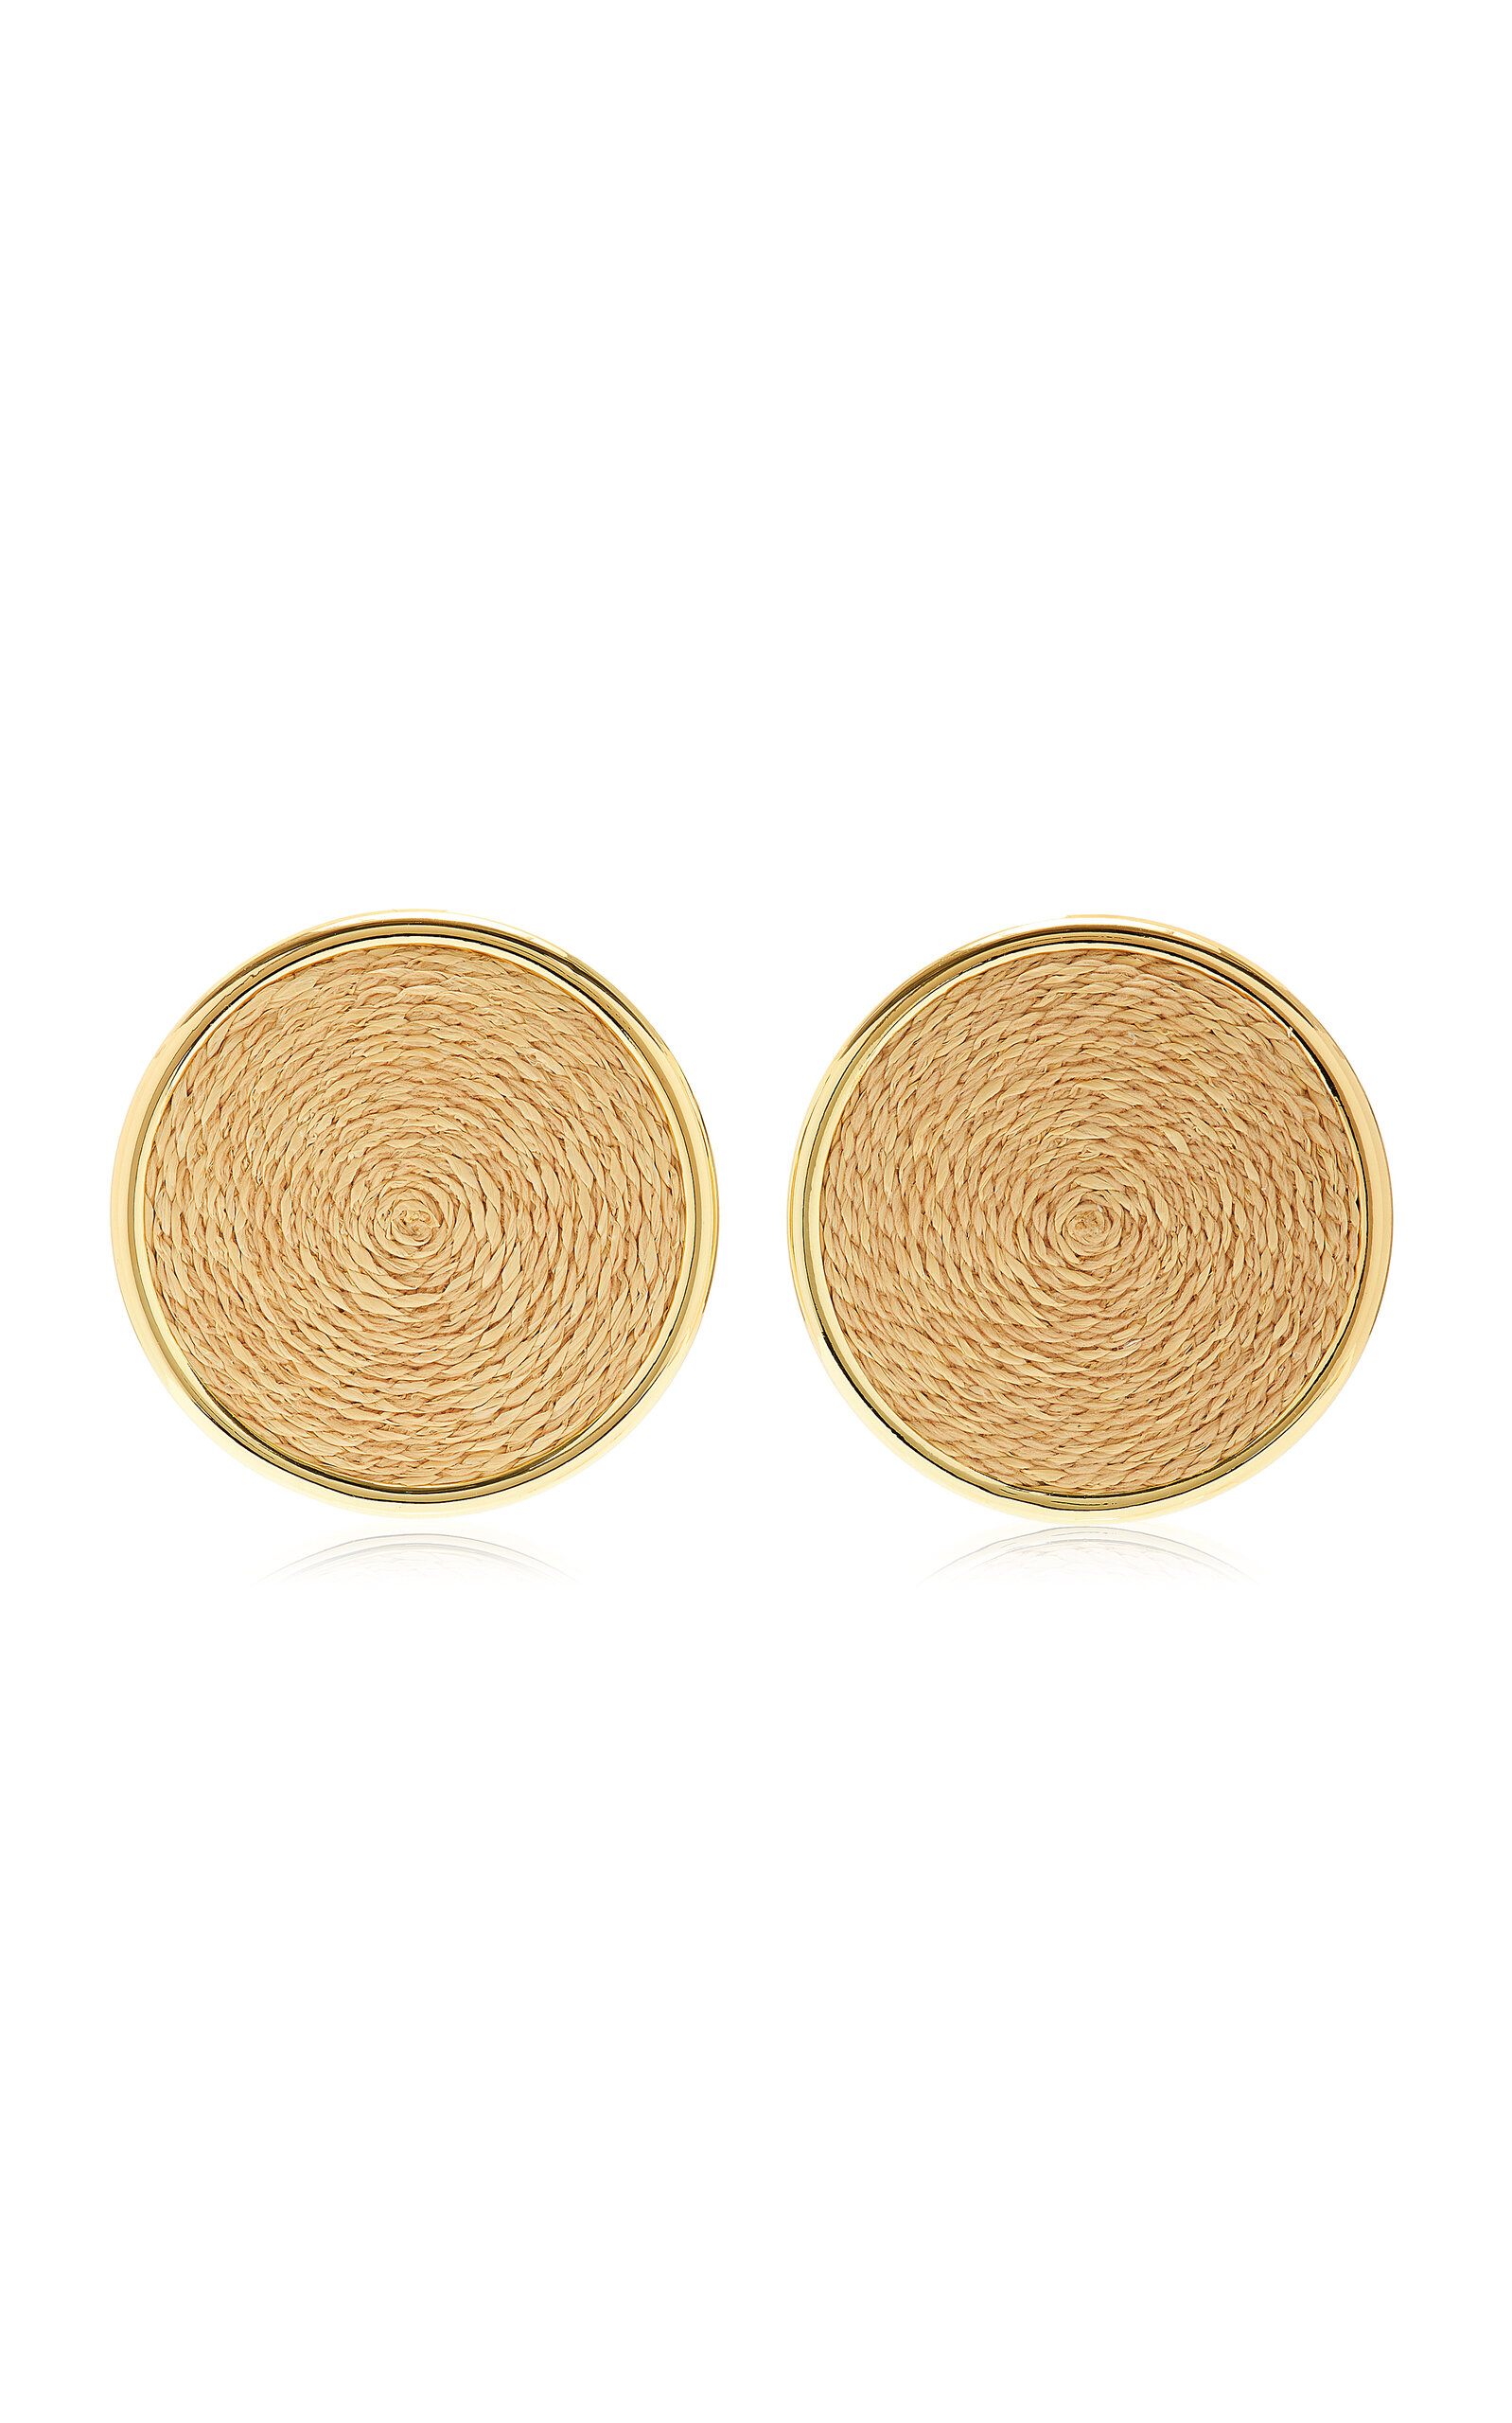 Cult Gaia - Brynn Woven Gold-Tone Earrings - Neutral - OS - Moda Operandi - Gifts For Her